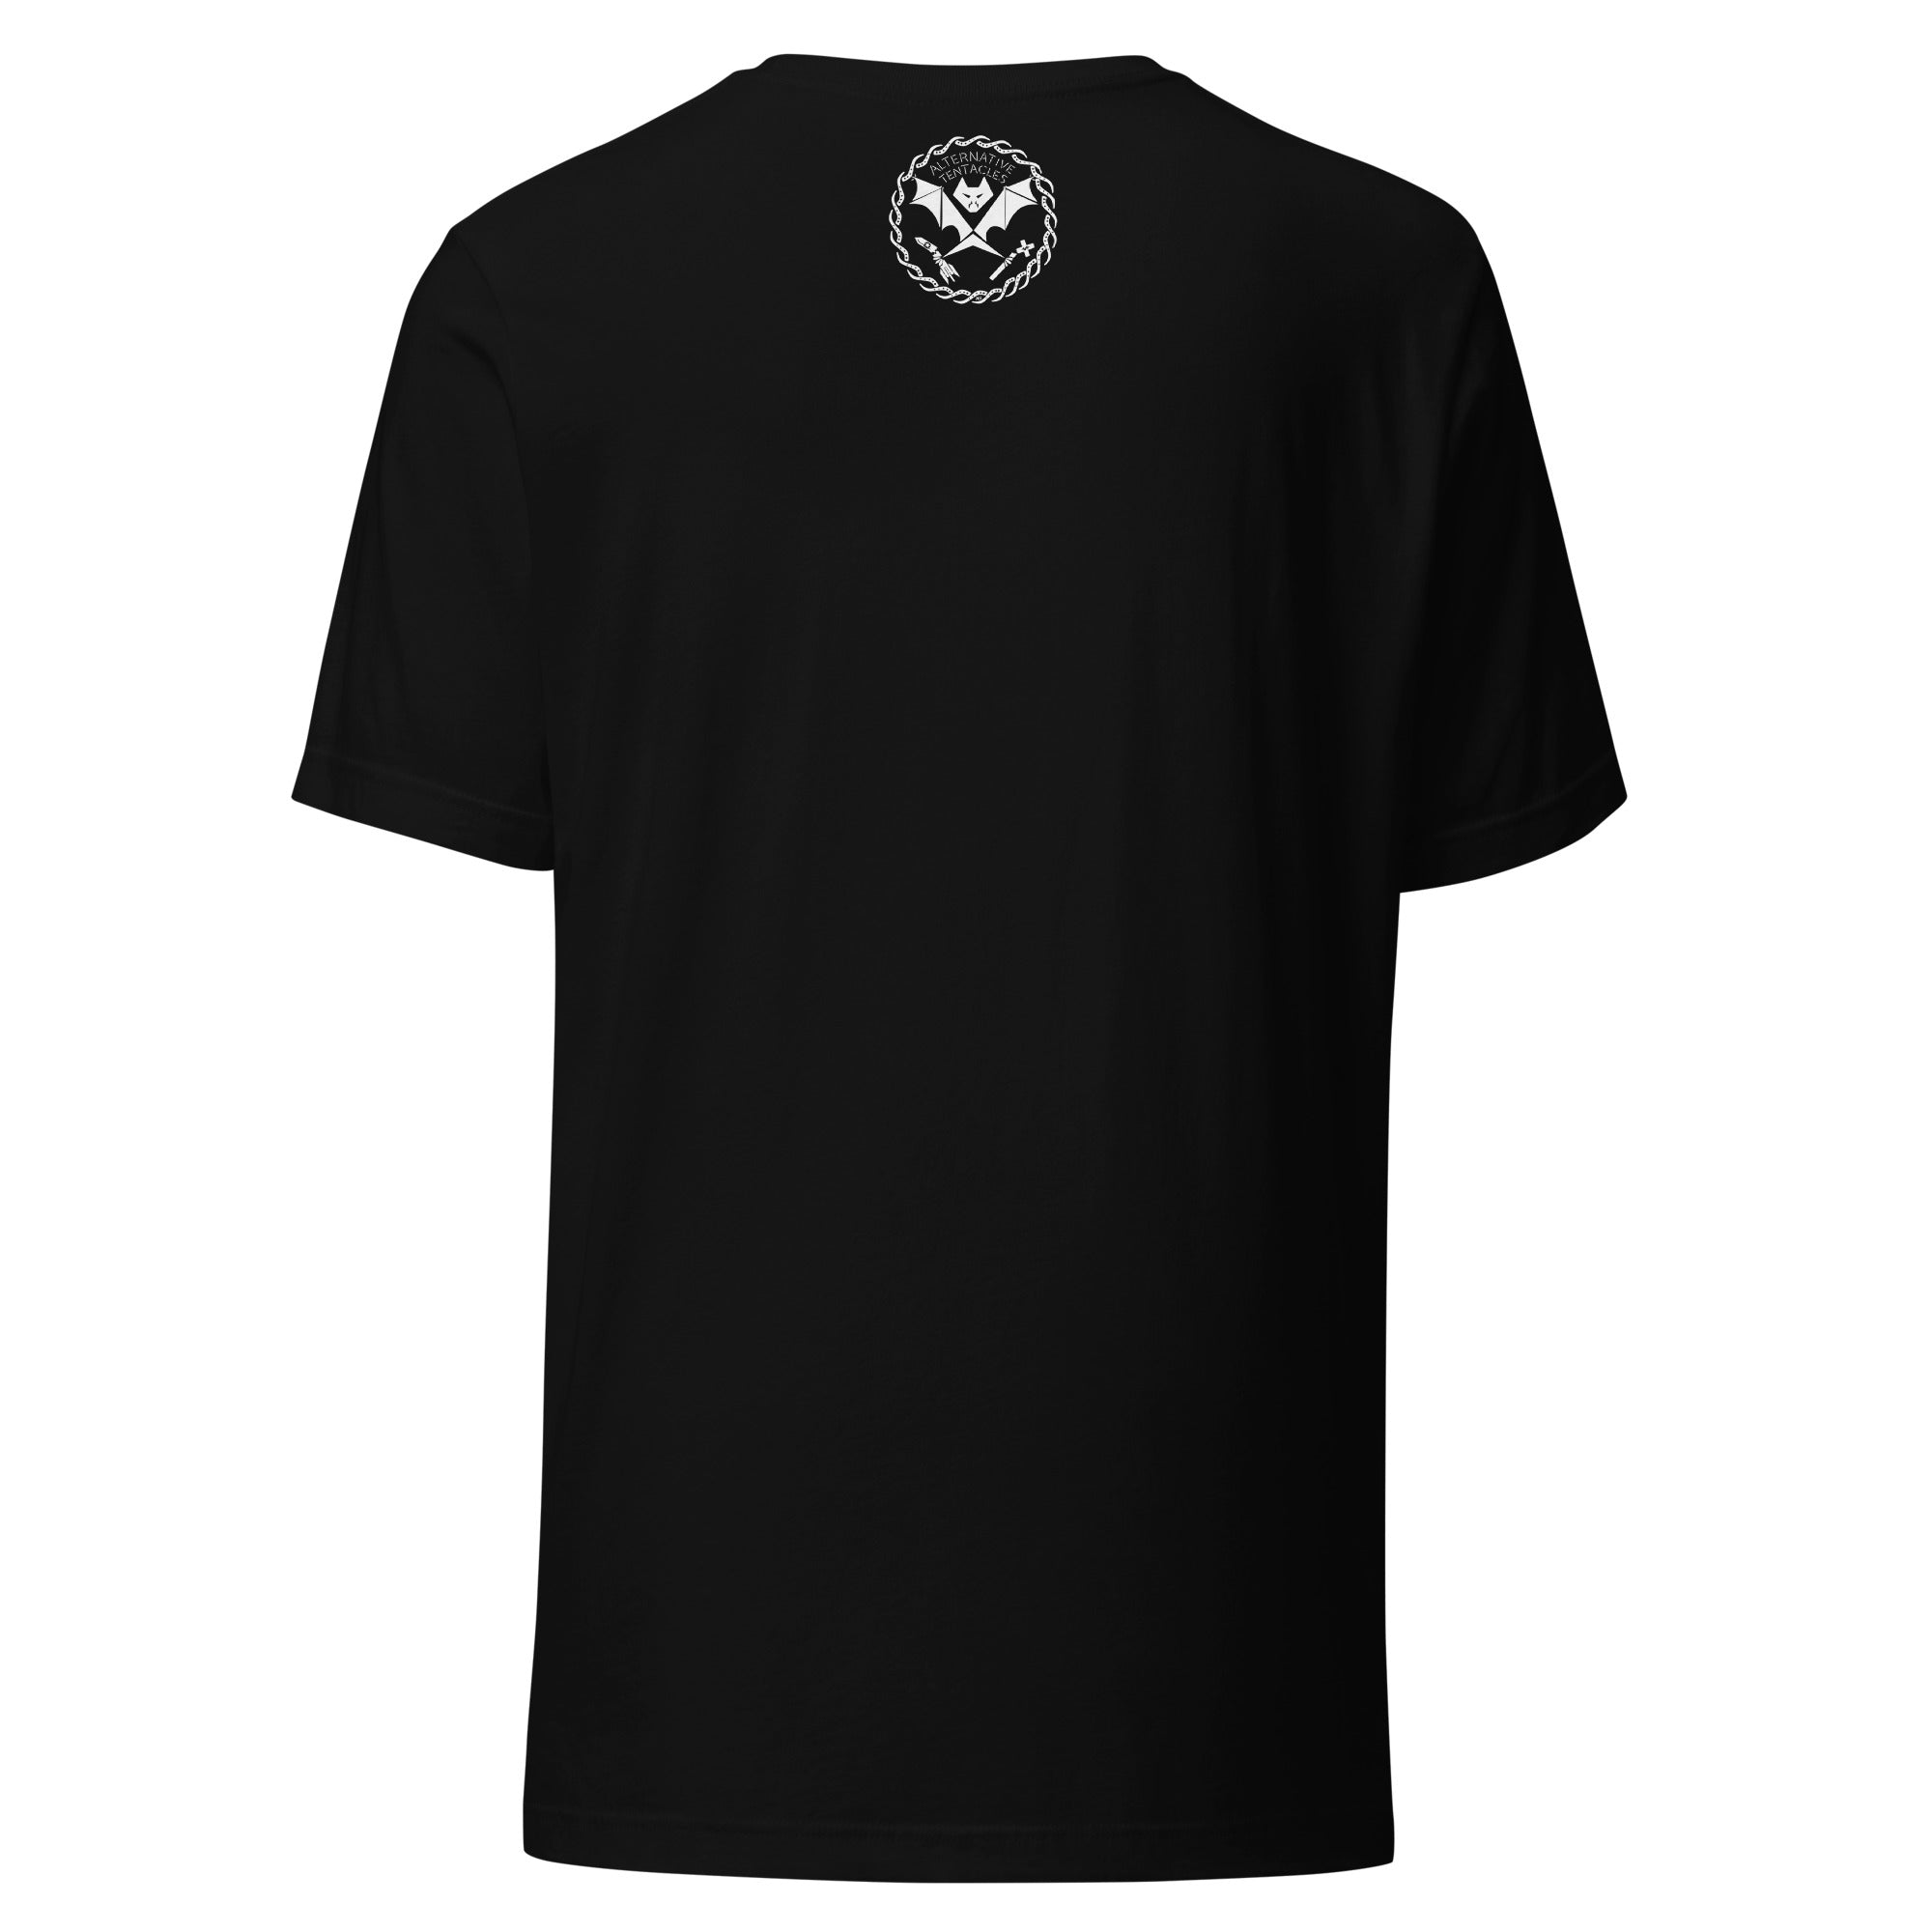 NOMEANSNO "Wrong" Unisex Black T-shirt